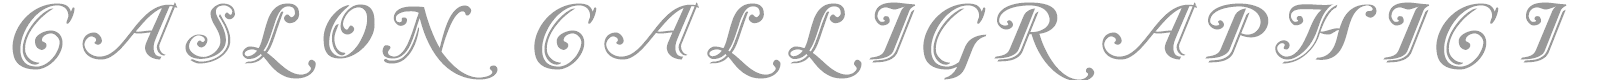 Font Caslon Calligraphic Initials